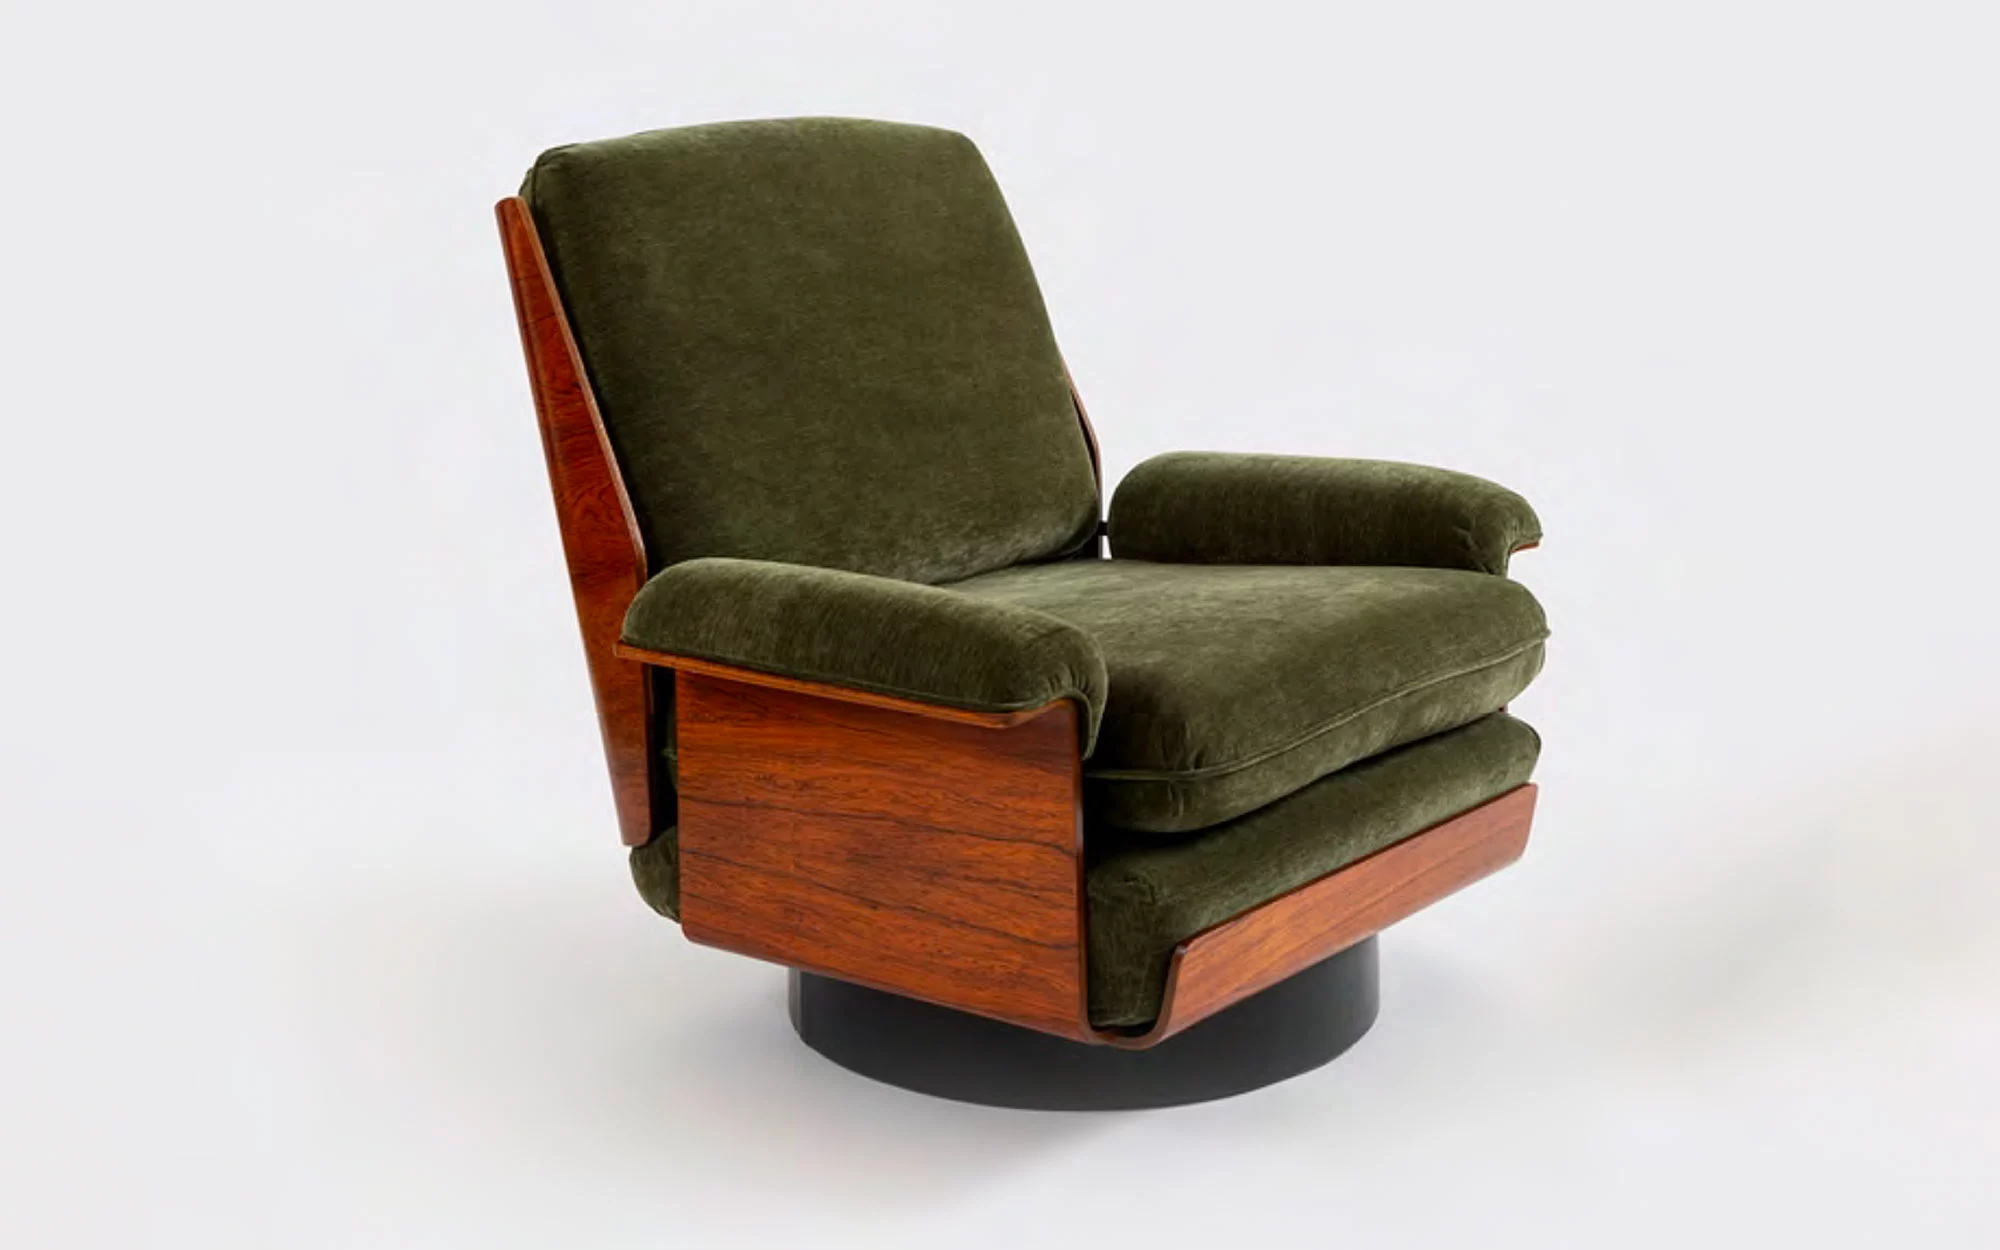 Viborg armchair (1)  - Brunier - Design Miami / Basel 2021.